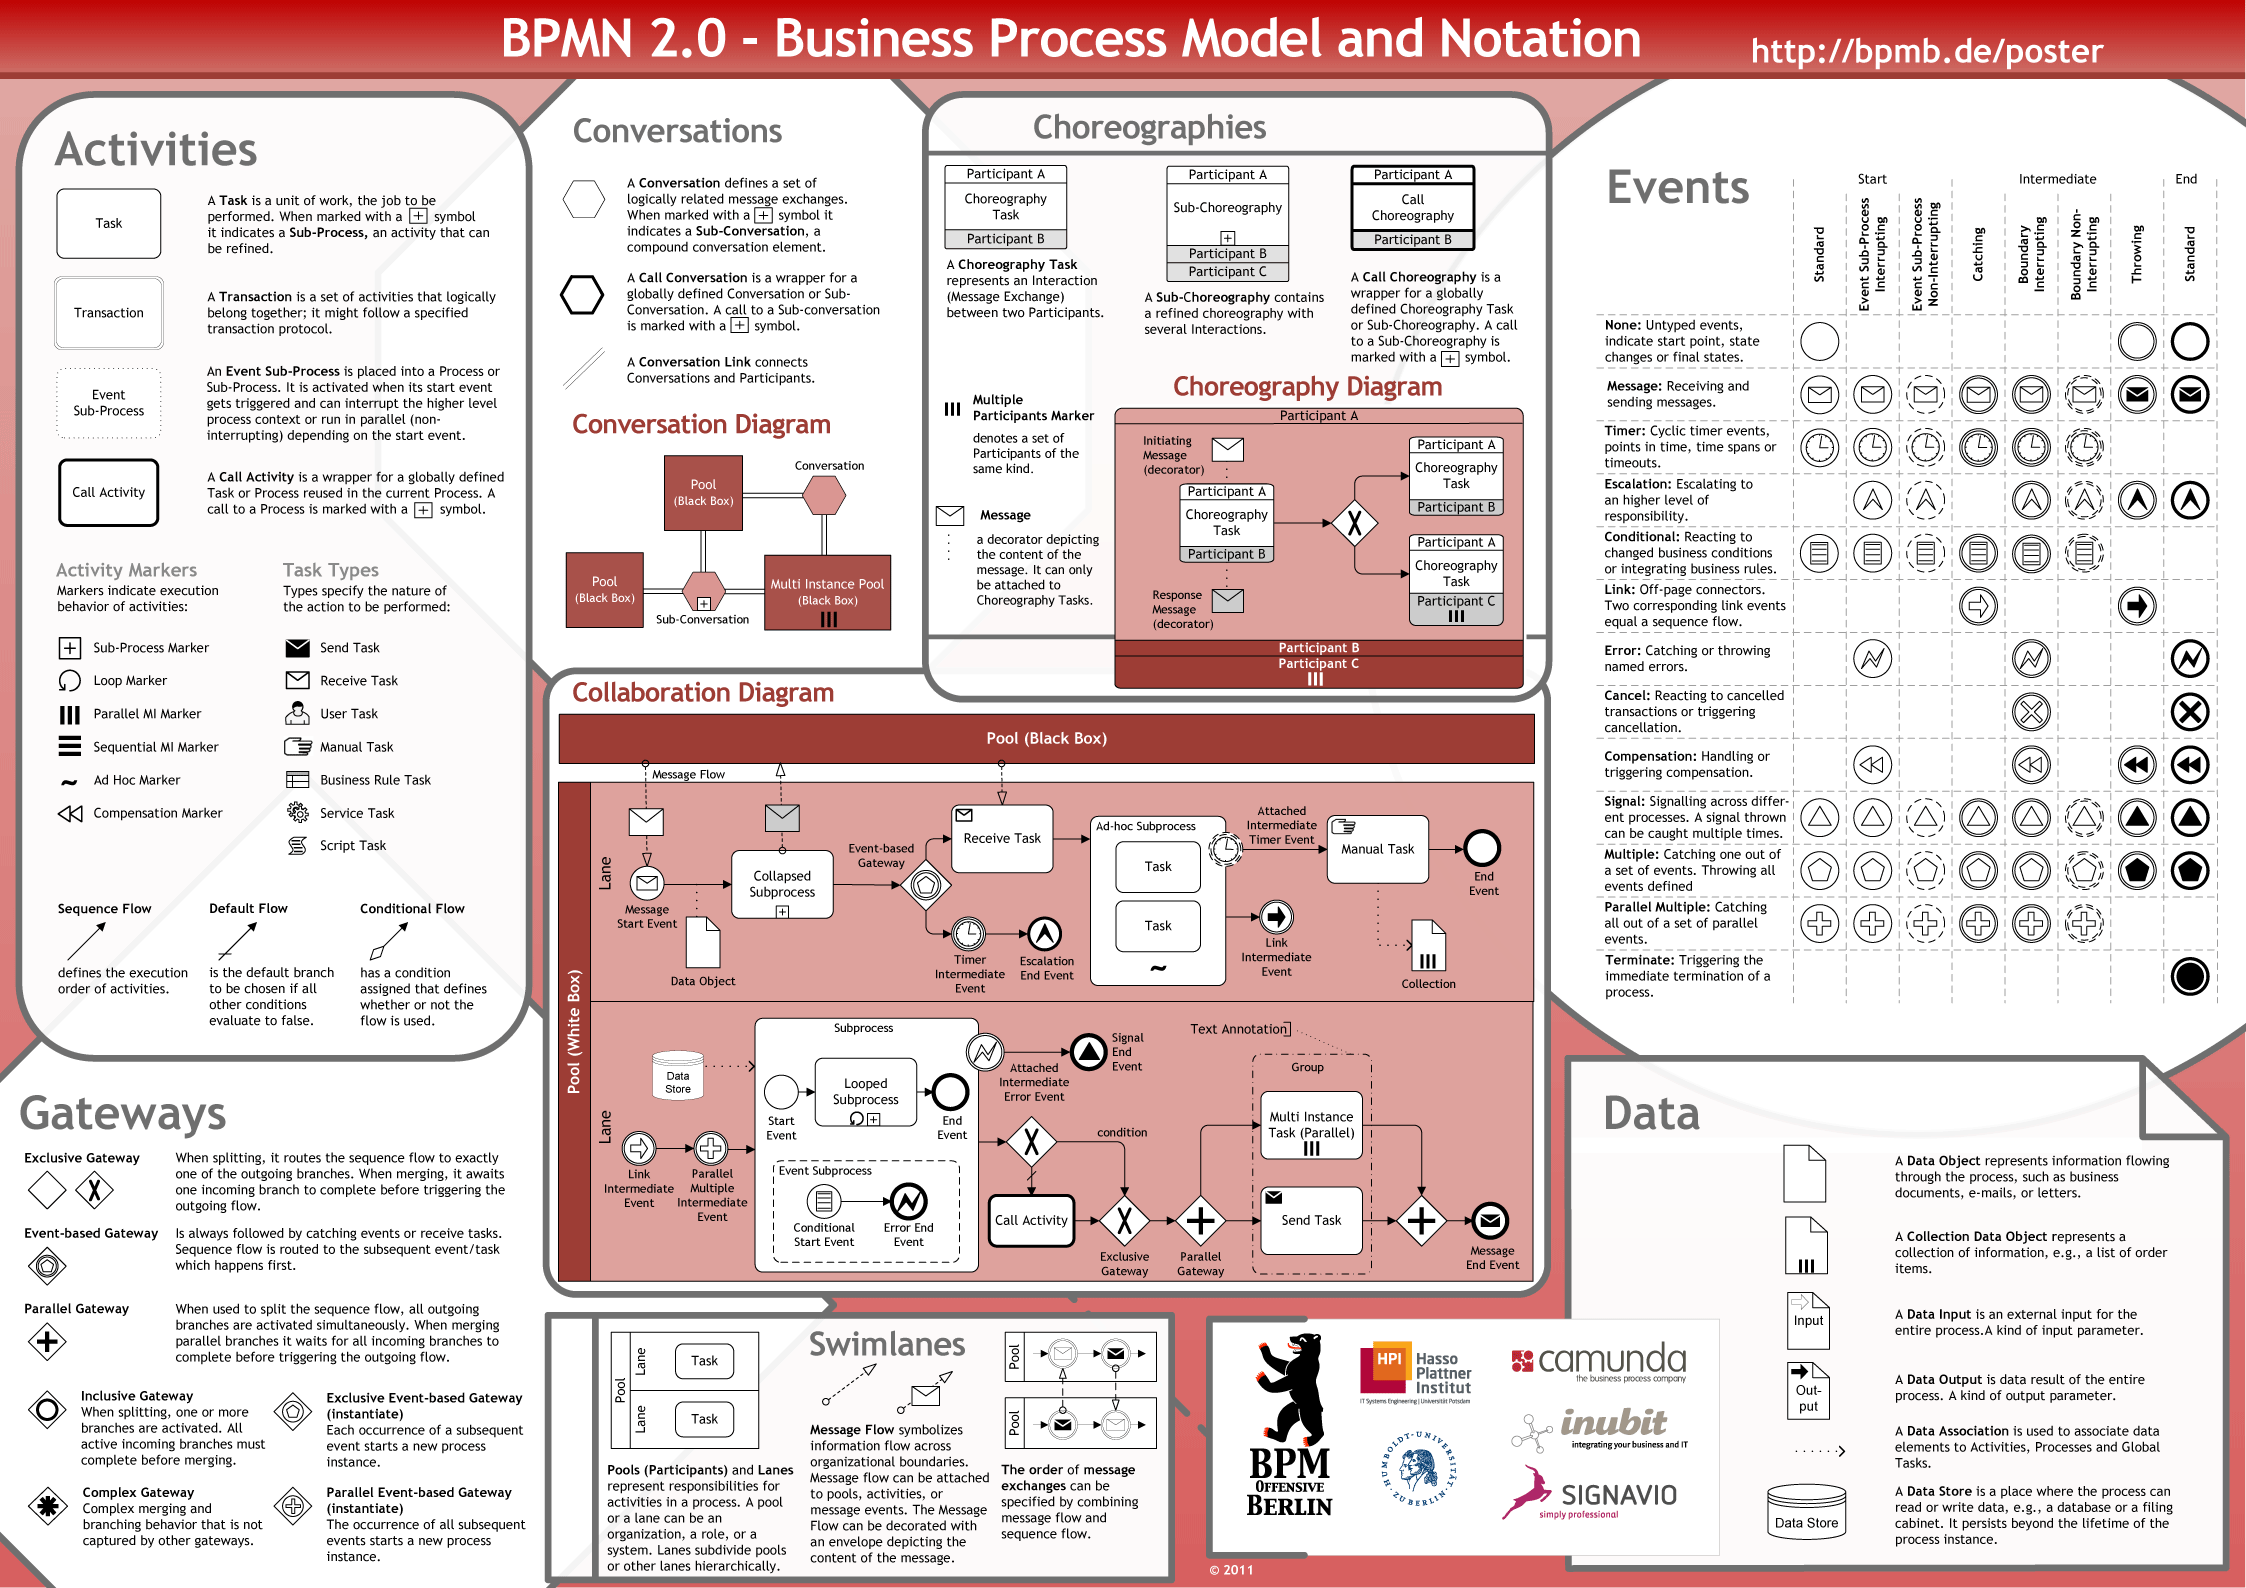 bpmn 2.0 pdf